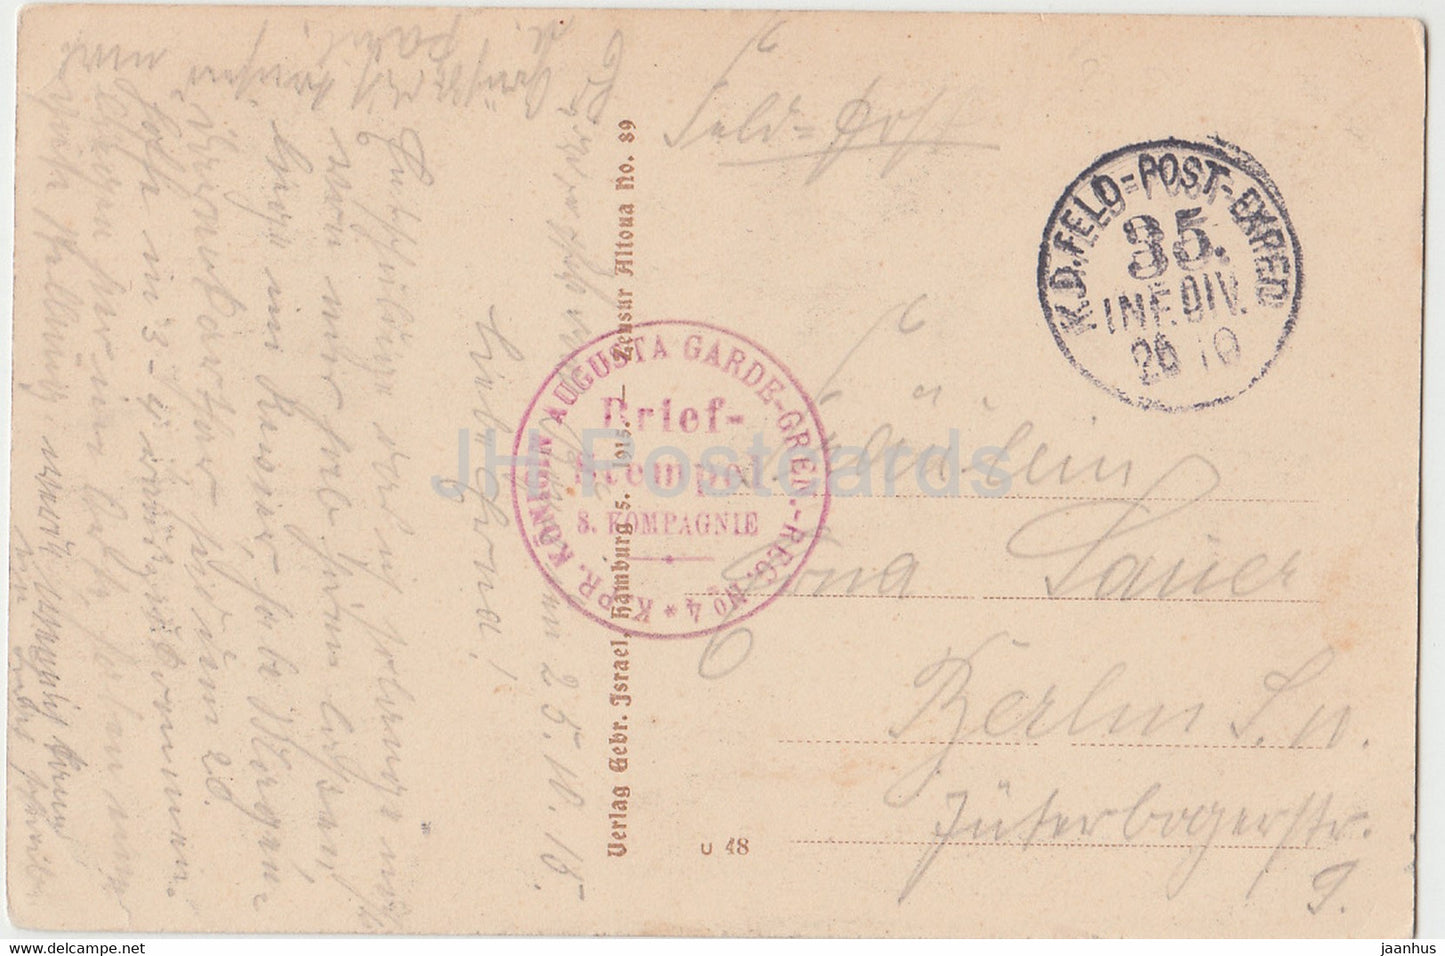 Kirche St Pierre Roye - Konigin Augusta Garde Gren Reg No 4 - Feldpost - carte postale ancienne - 1915 - France - utilisé